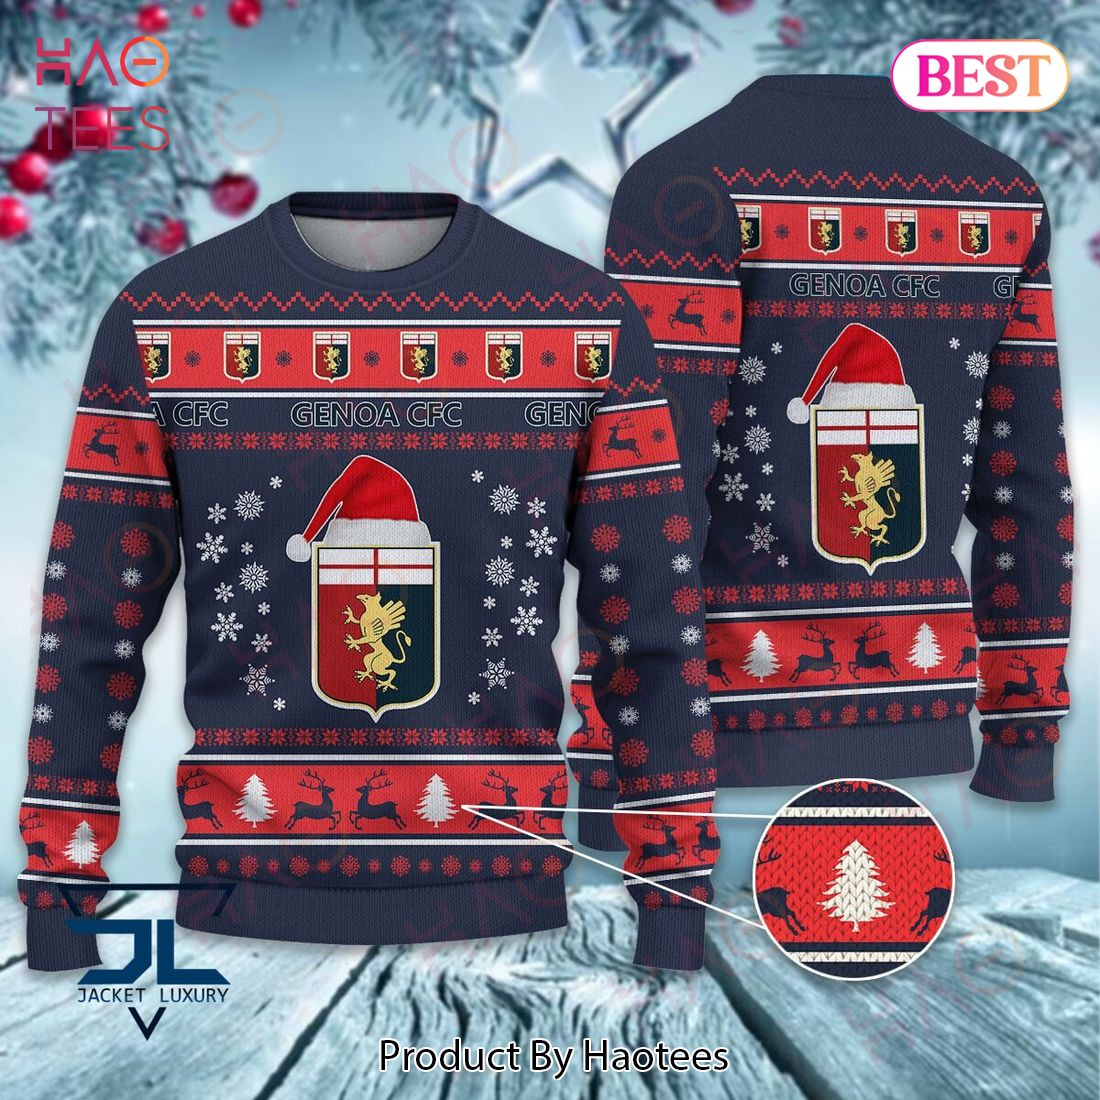 BEST Genoa CFC Christmas Luxury Brand Sweater Limited Edition